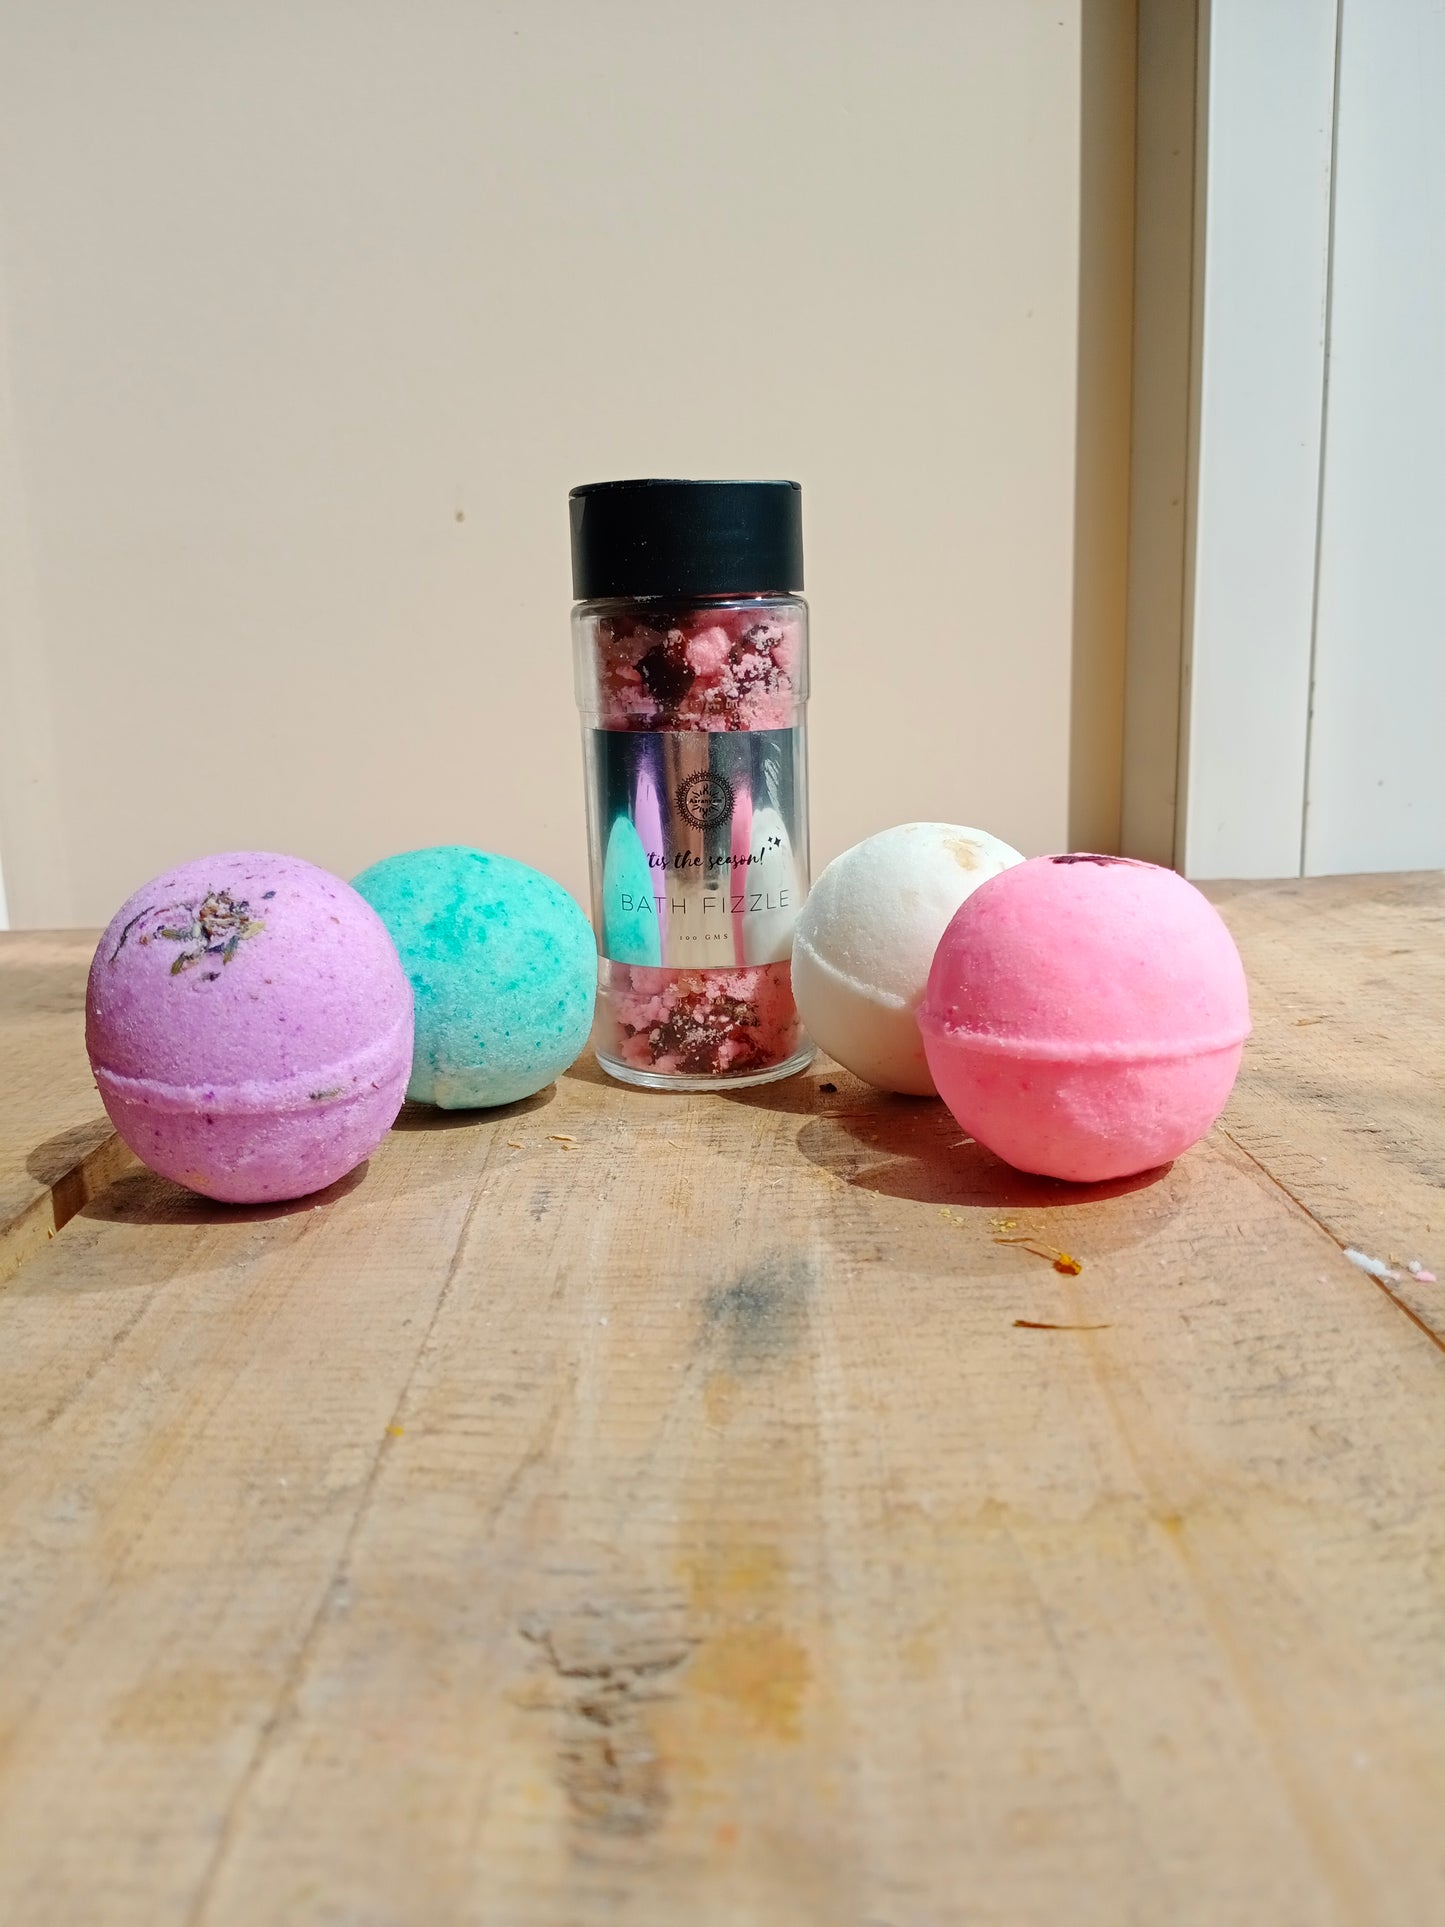 Zen Spa gift set for women _ Bath Bomb -Rose, Oats, Lavender , Jasmin 75 gms each with bath Fizzle (pink salt, Epsom salt dry rose petals ) |Refreshing hot water bath hydrating